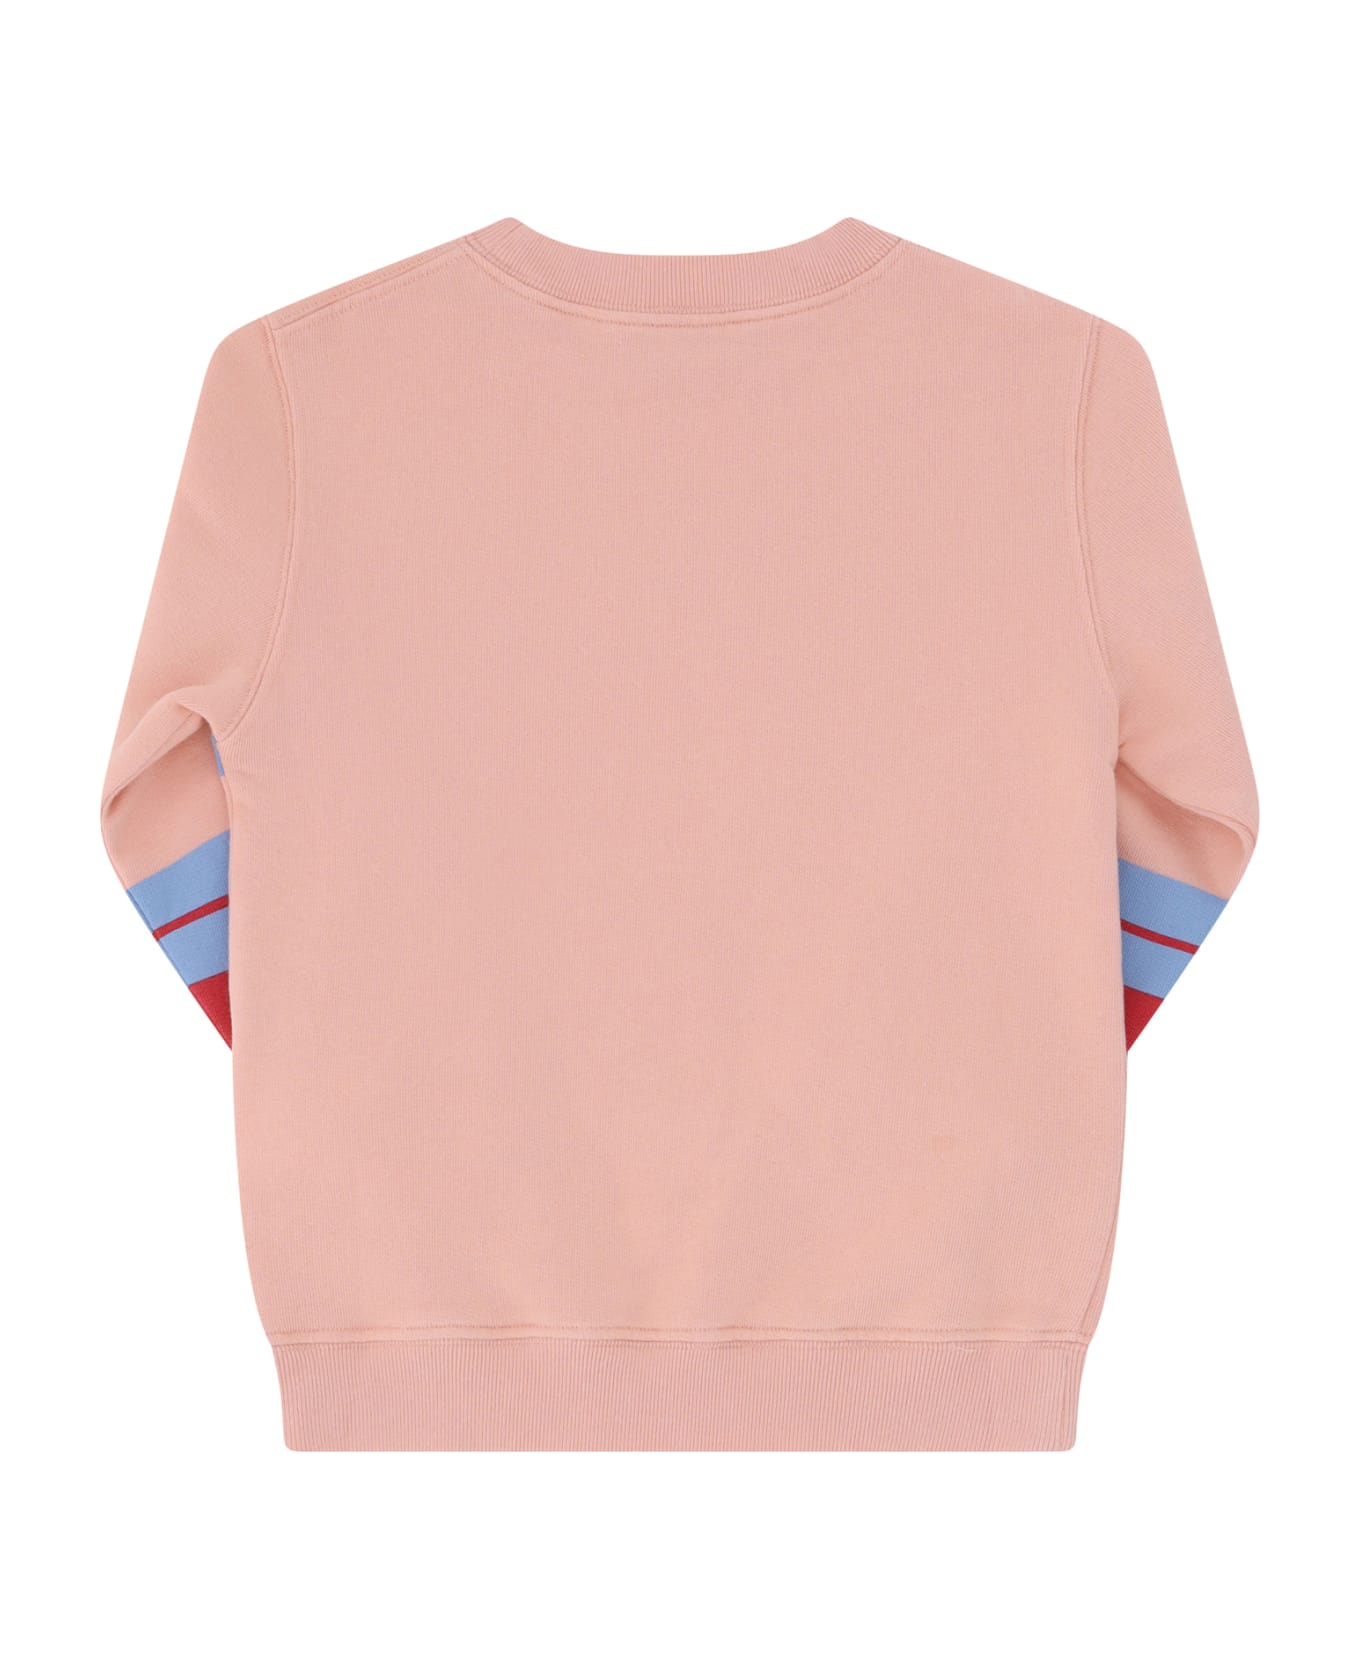 Gucci Sweatshirt For Girl - Pink/sky/tulips